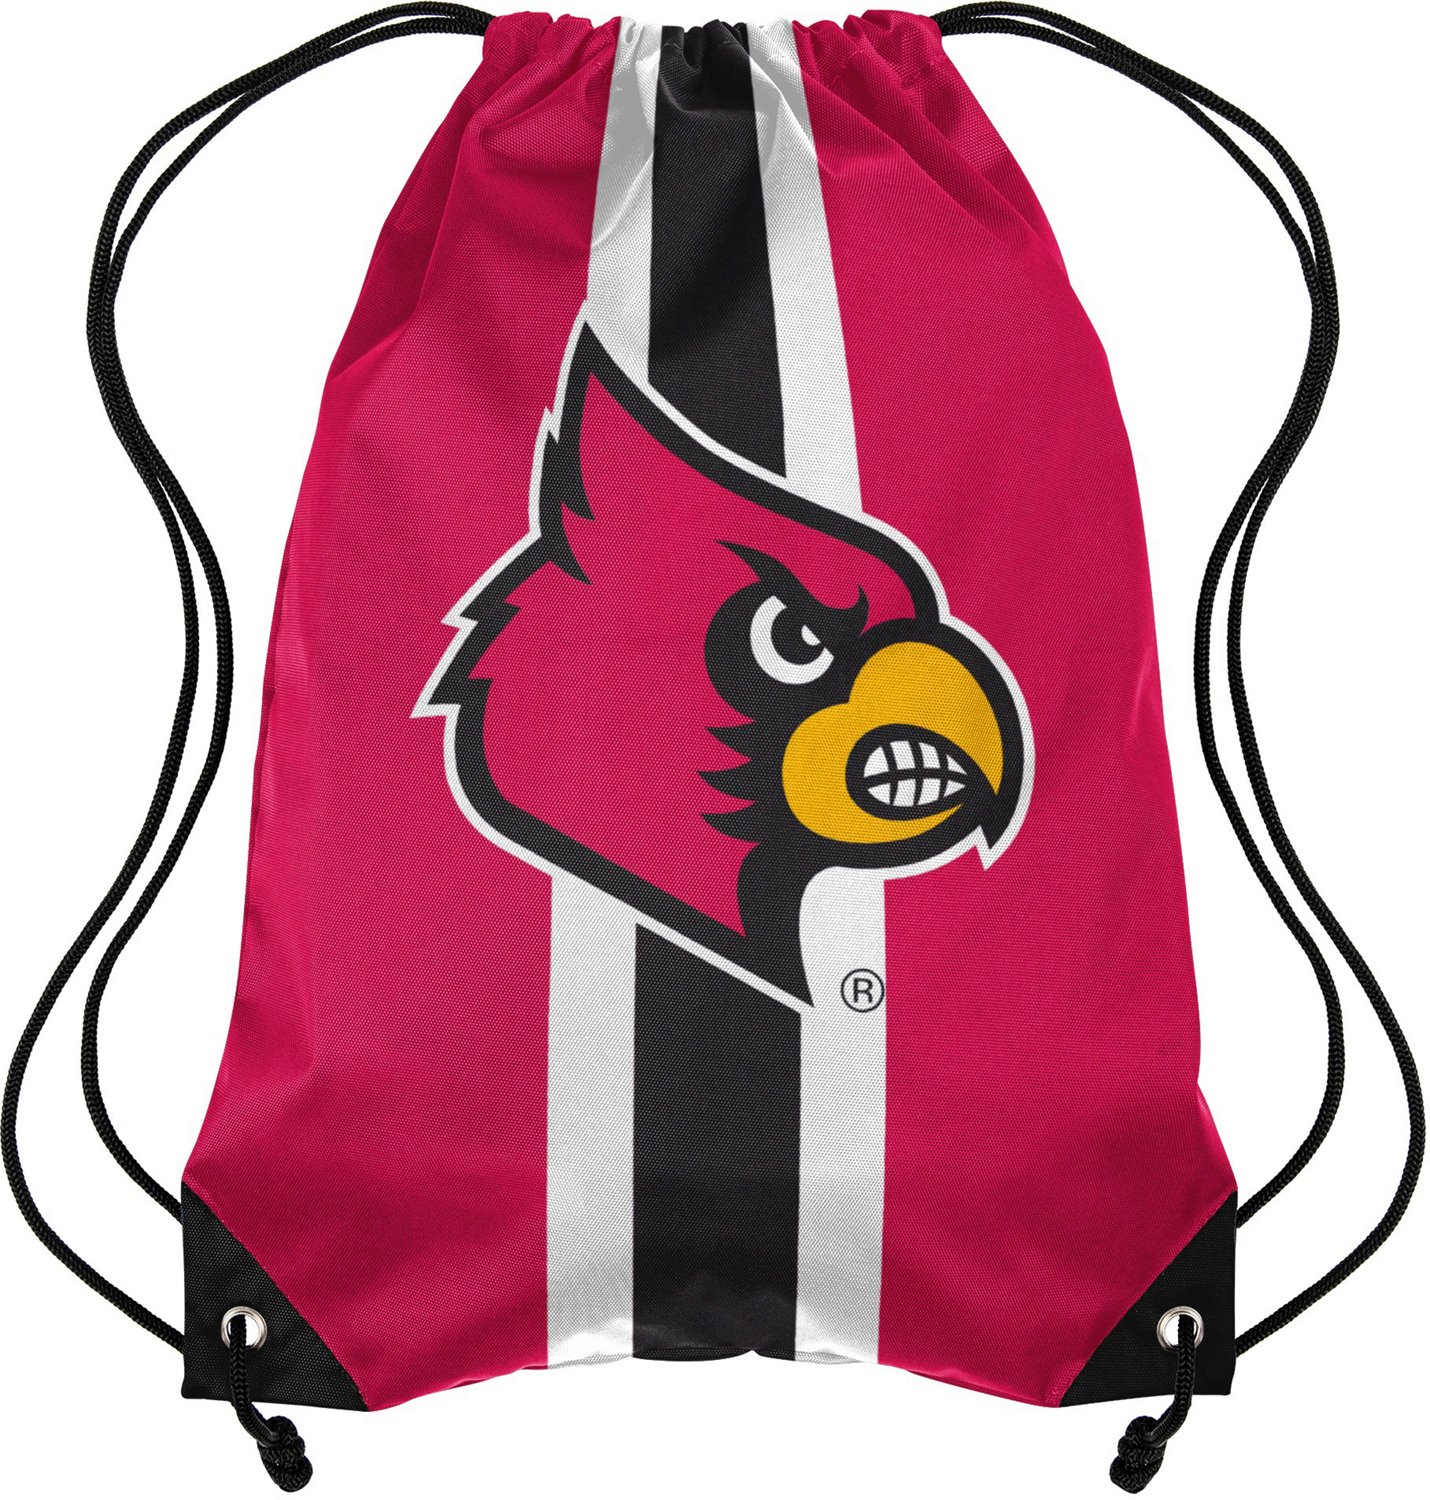 University of Louisville Bag 